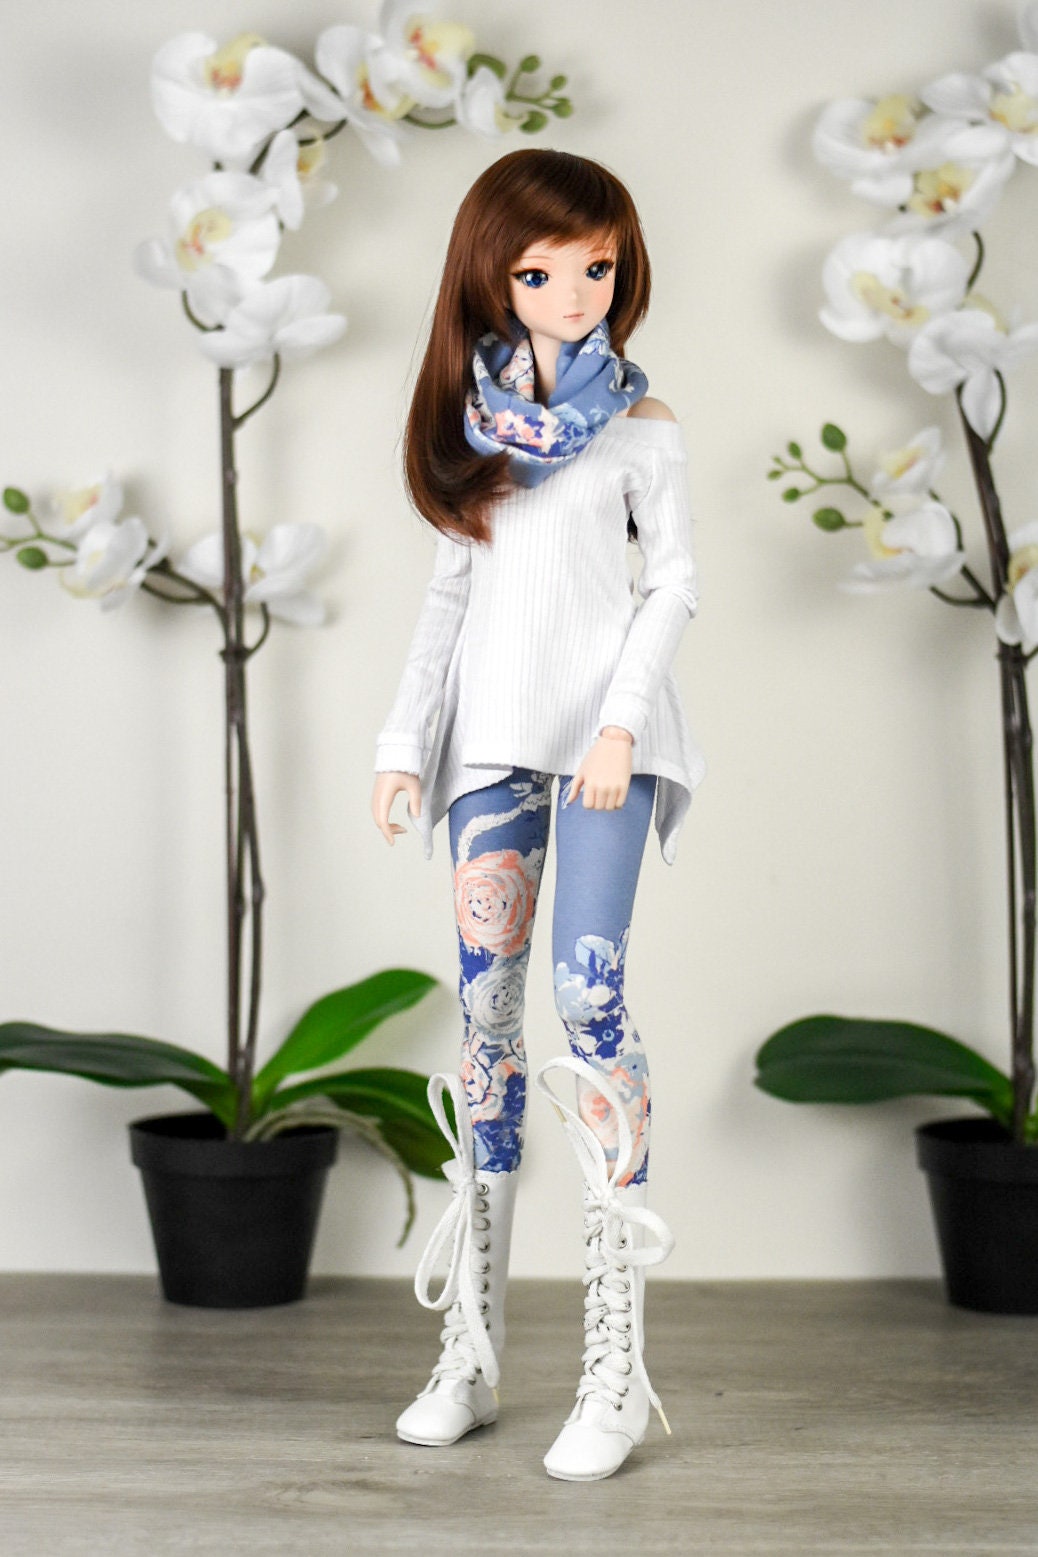 Leggings for bjd 1/3 scale doll like Smart Doll floral